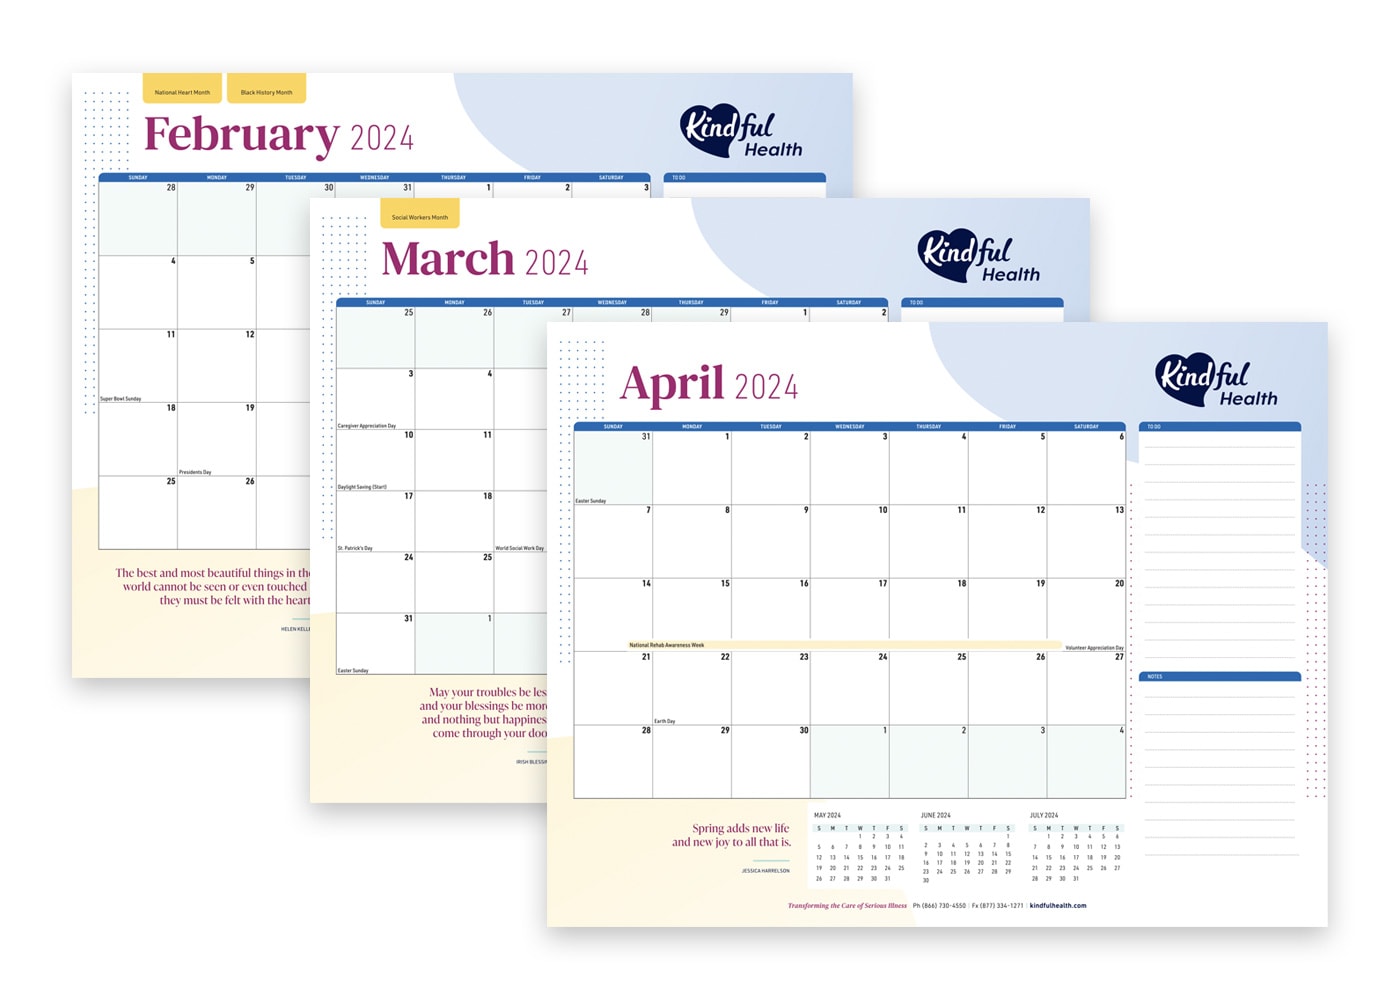 Branded custom desktop calendar for Kindful Health.